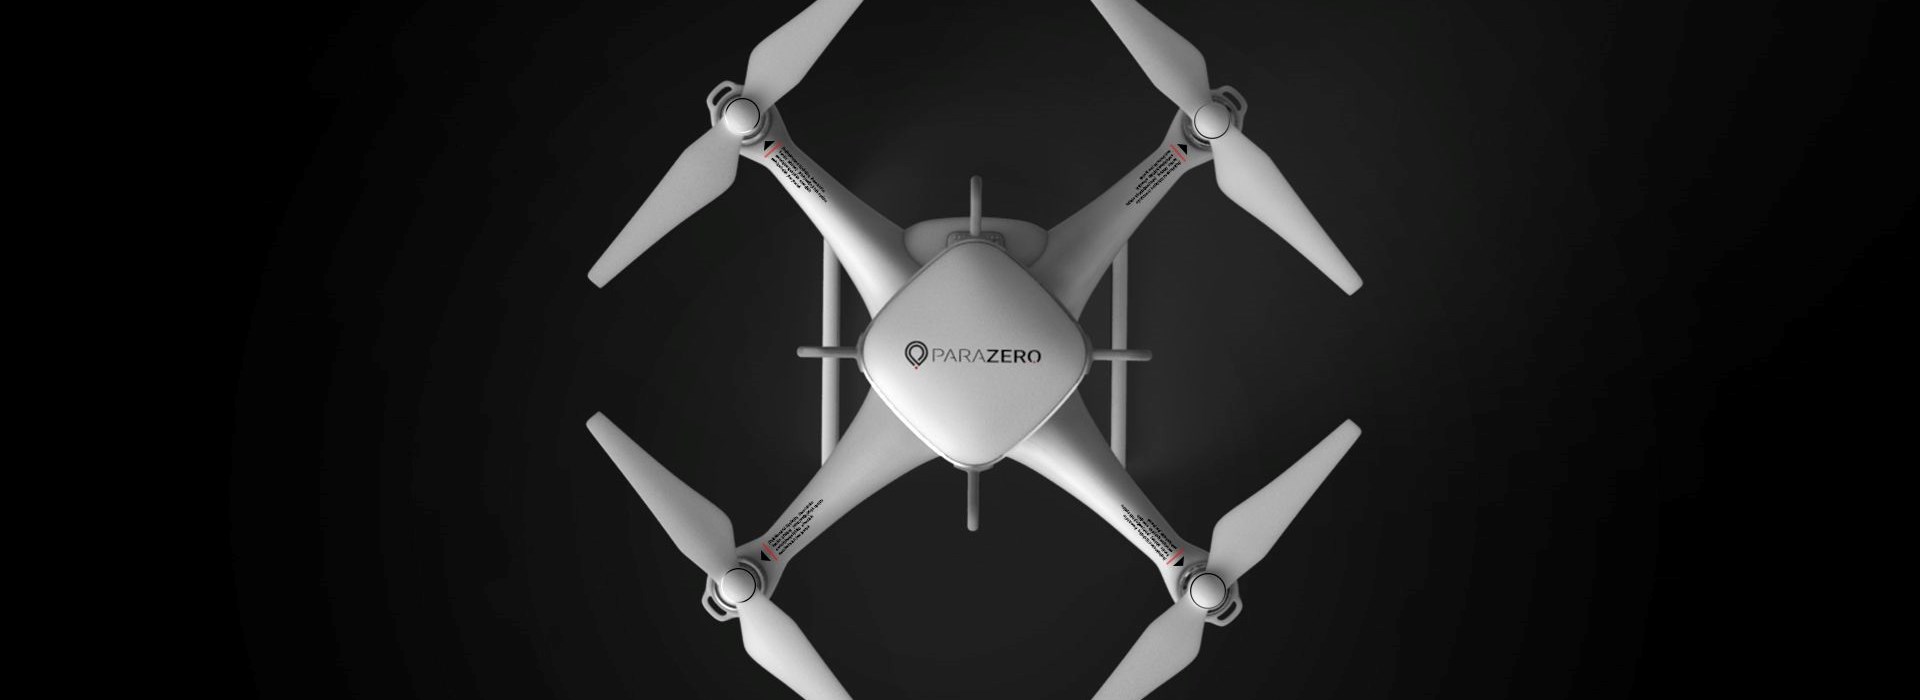 Top view of Parazero drone black background.